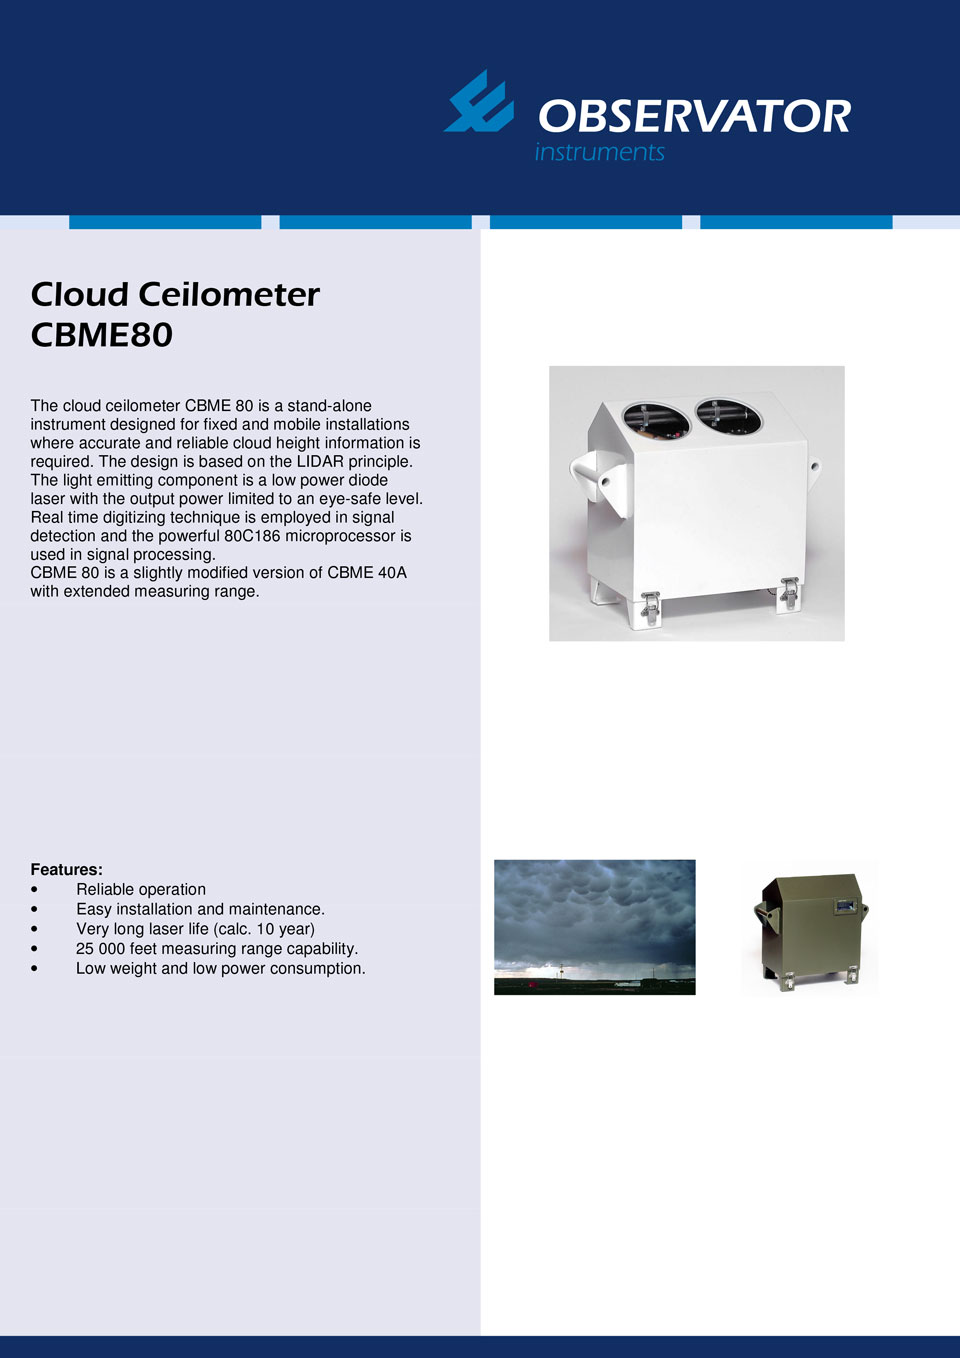 CBME80 Cloud Ceilometer